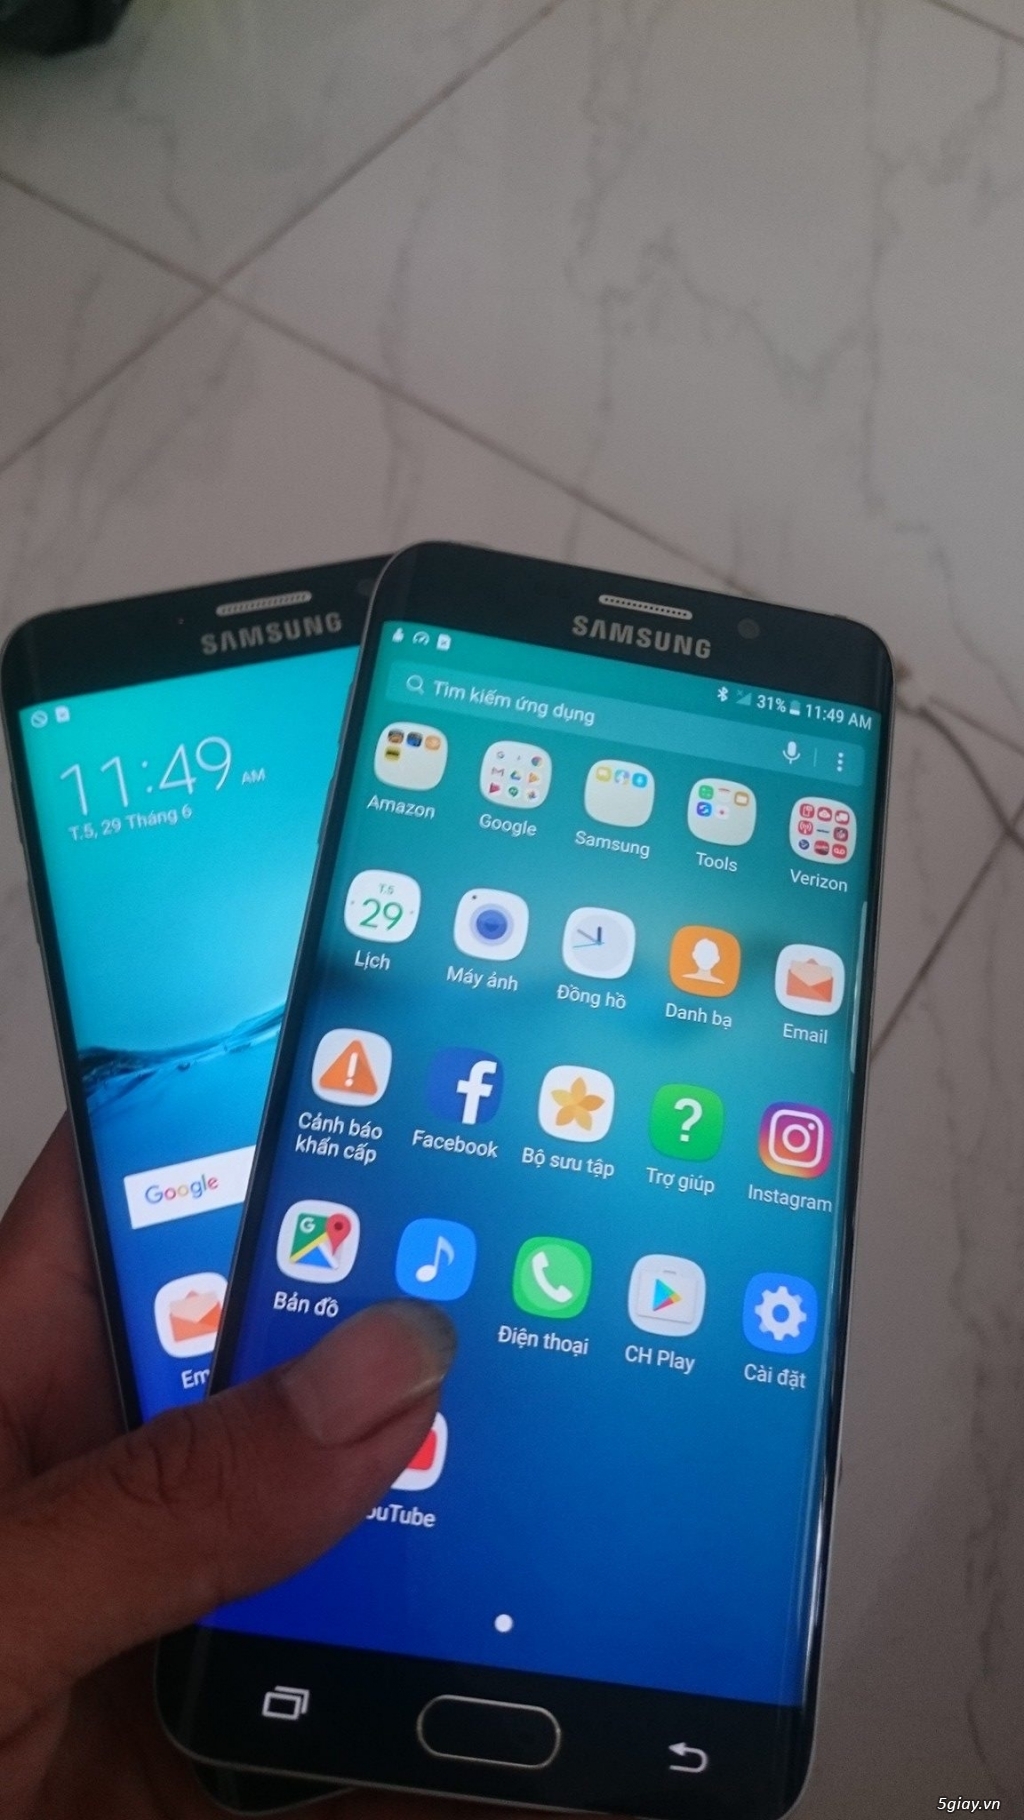 Samsung galaxy S6 plus edge 32gb like new bảo hành 12 tháng - 3